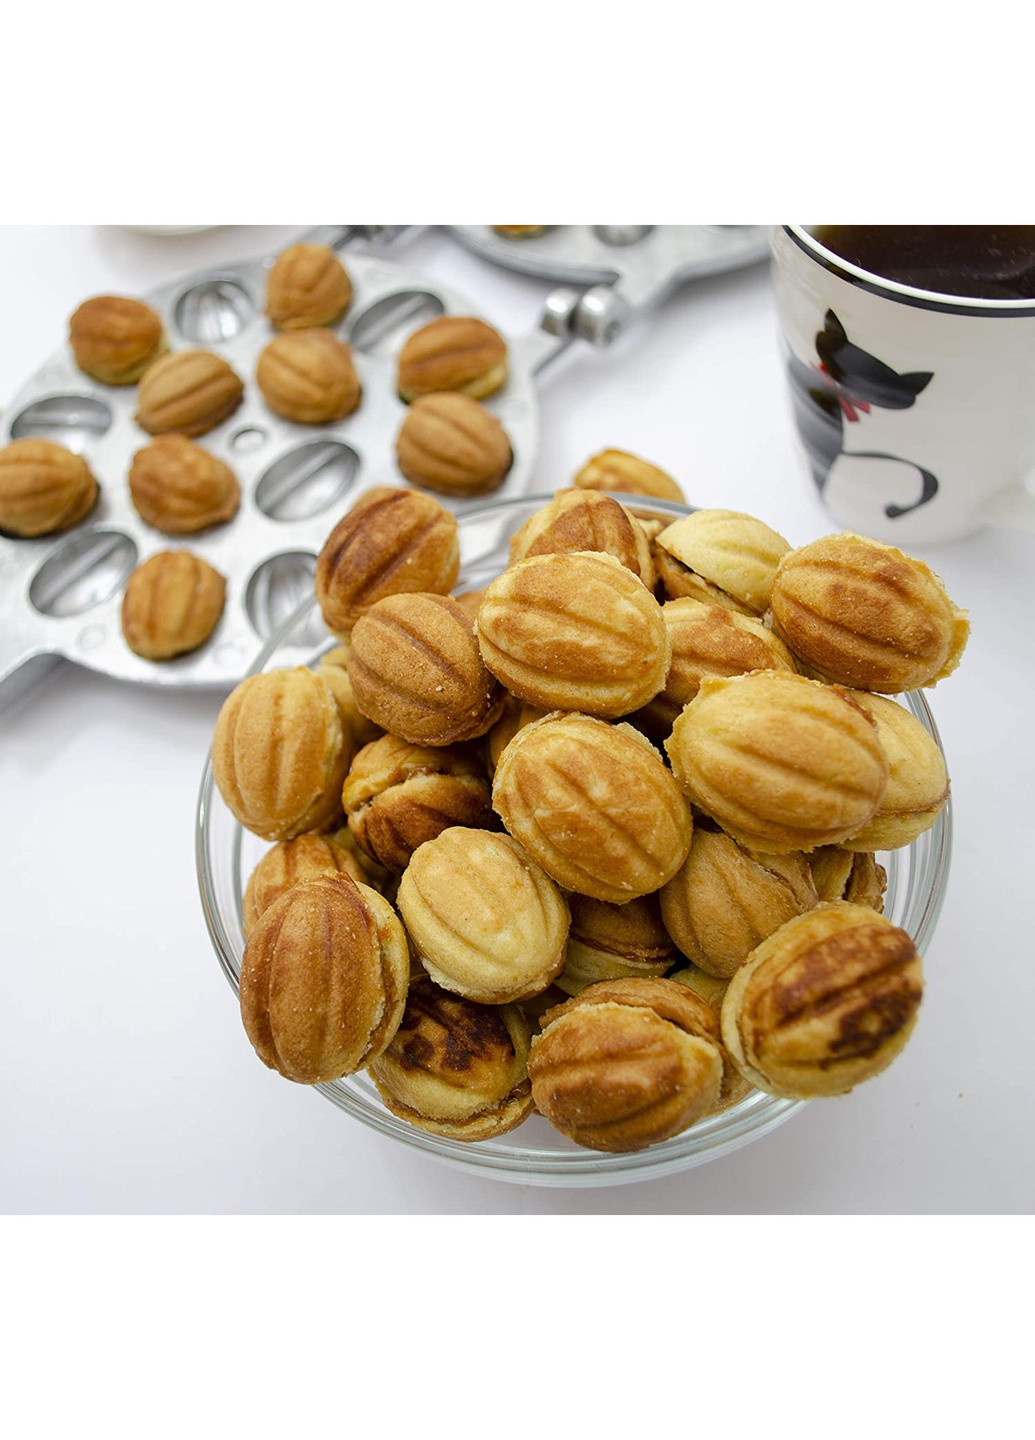 Орешница форма для выпечки орешков на 16 половинок орехов ХЕАЗ (258959223)